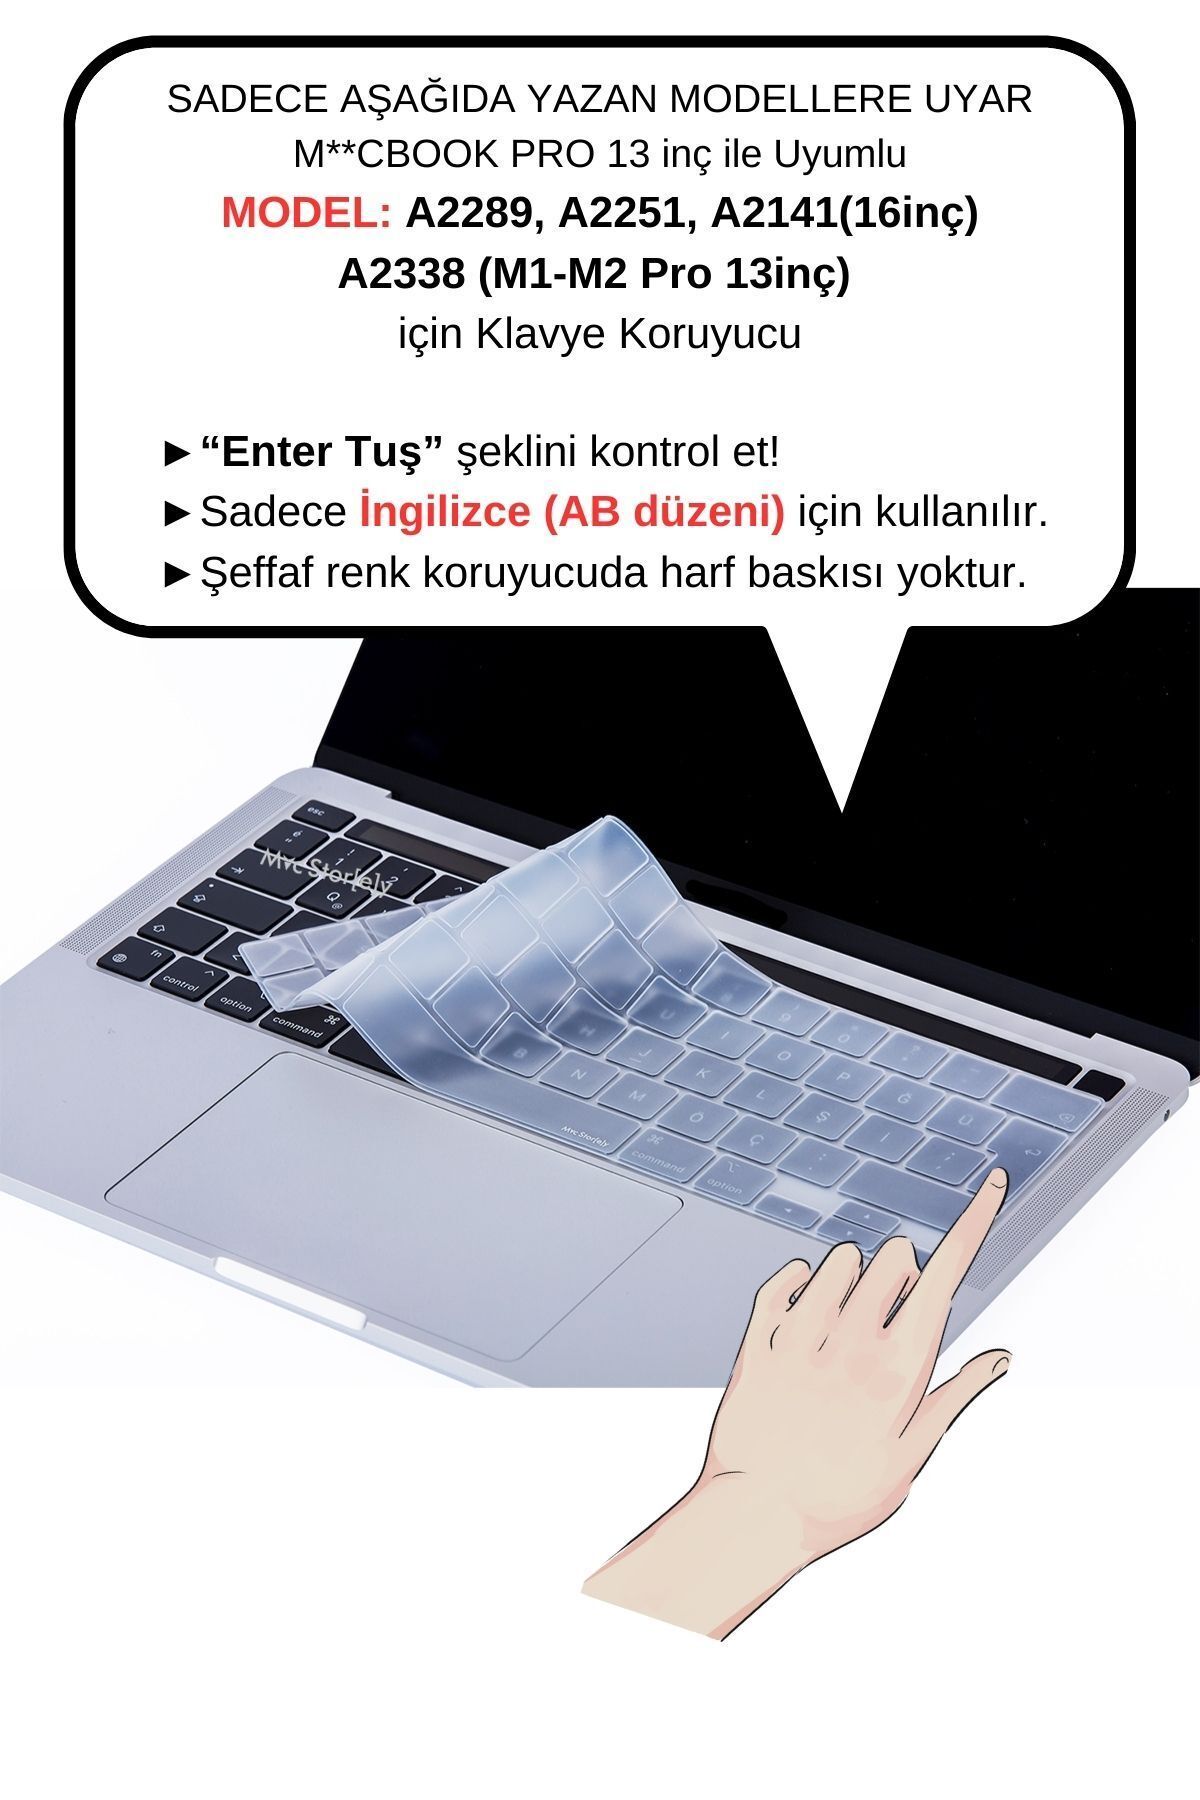 Mcstorey Macbook Klavye Koruyucu Mac Pro 13inç M1-m2 Için (UK-İNGİLİZCE) A2338 A2289 A2251 A2141 Iıe Uyumlu